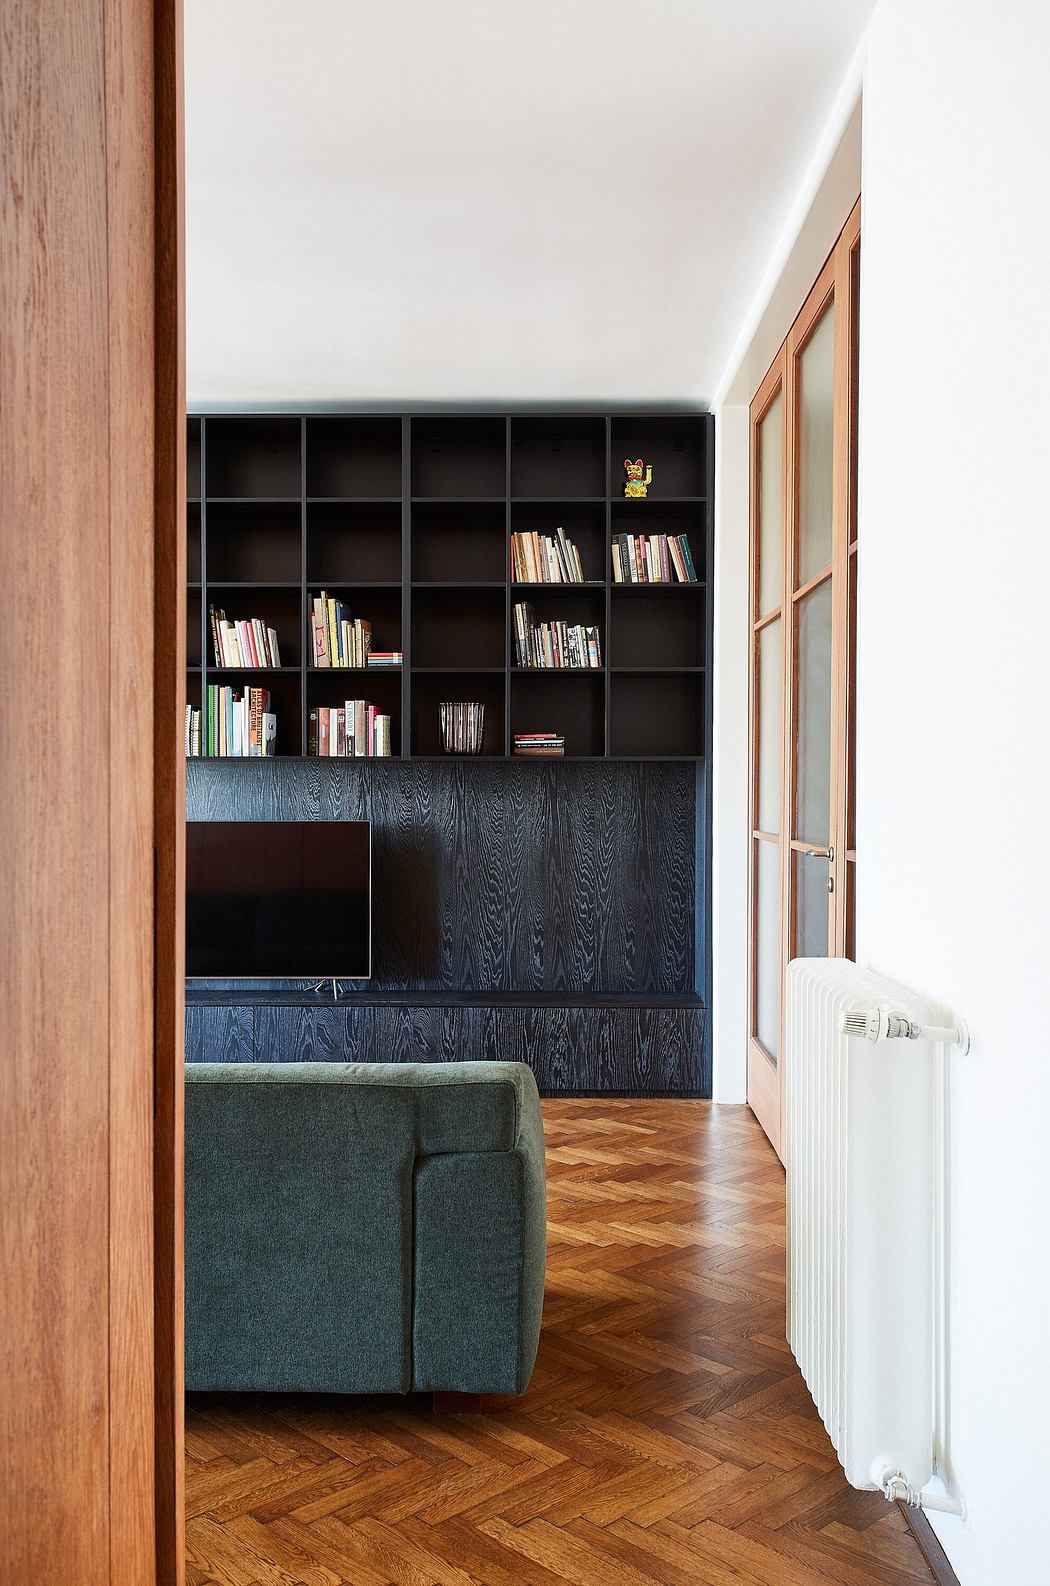 Contemporary room with a black bookshelf, herringbone floor, and a